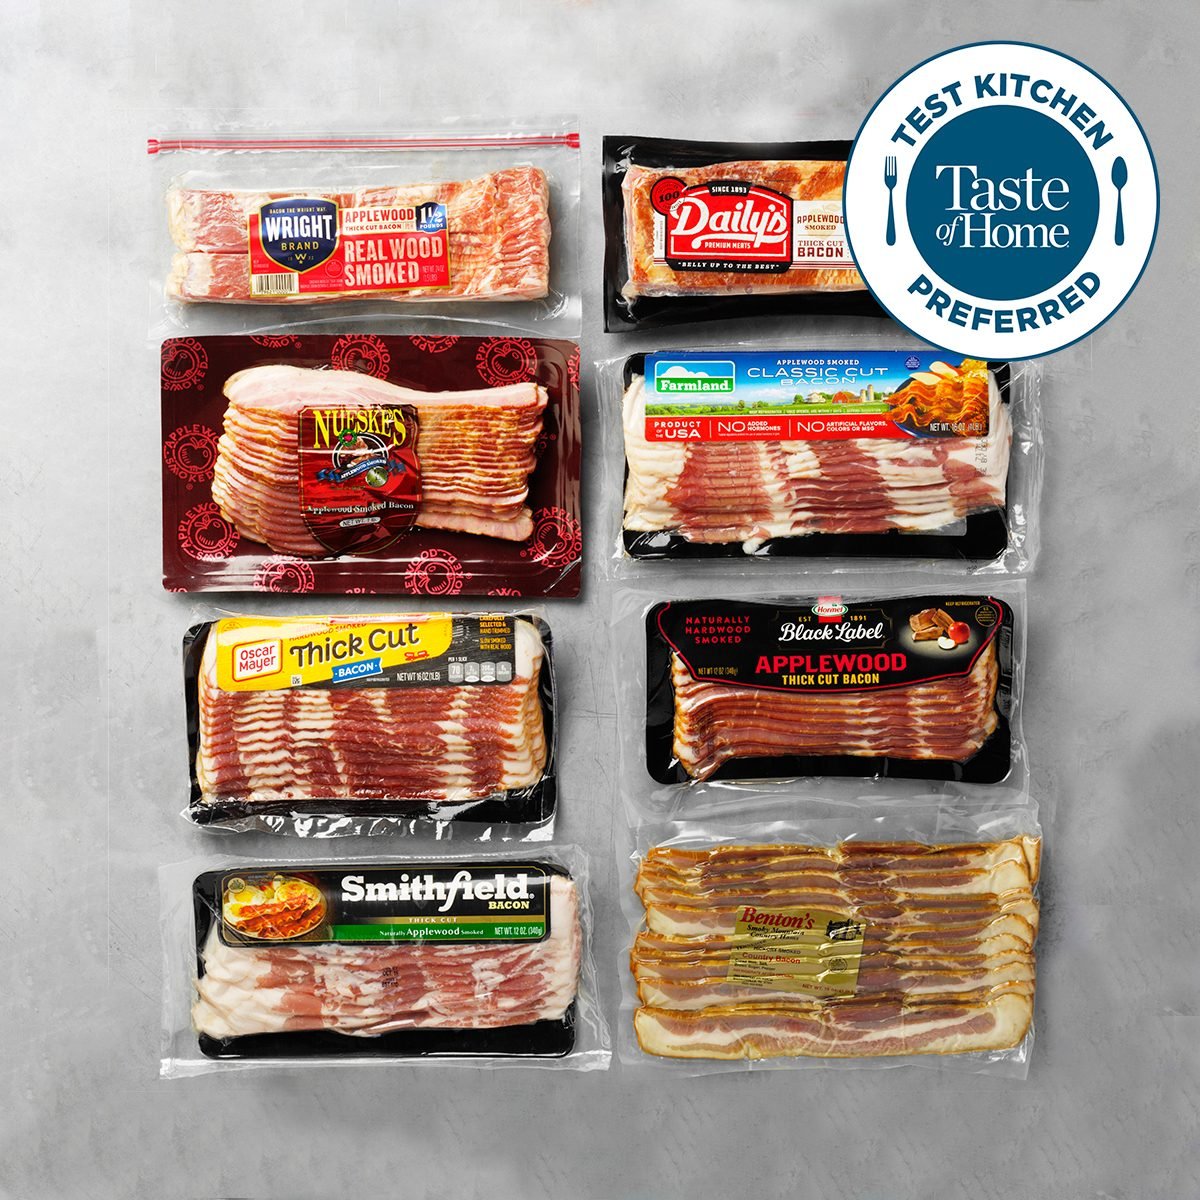 https://www.tasteofhome.com/wp-content/uploads/2020/10/test-kitchen-preferred-the-best-bacon-SQ.jpg